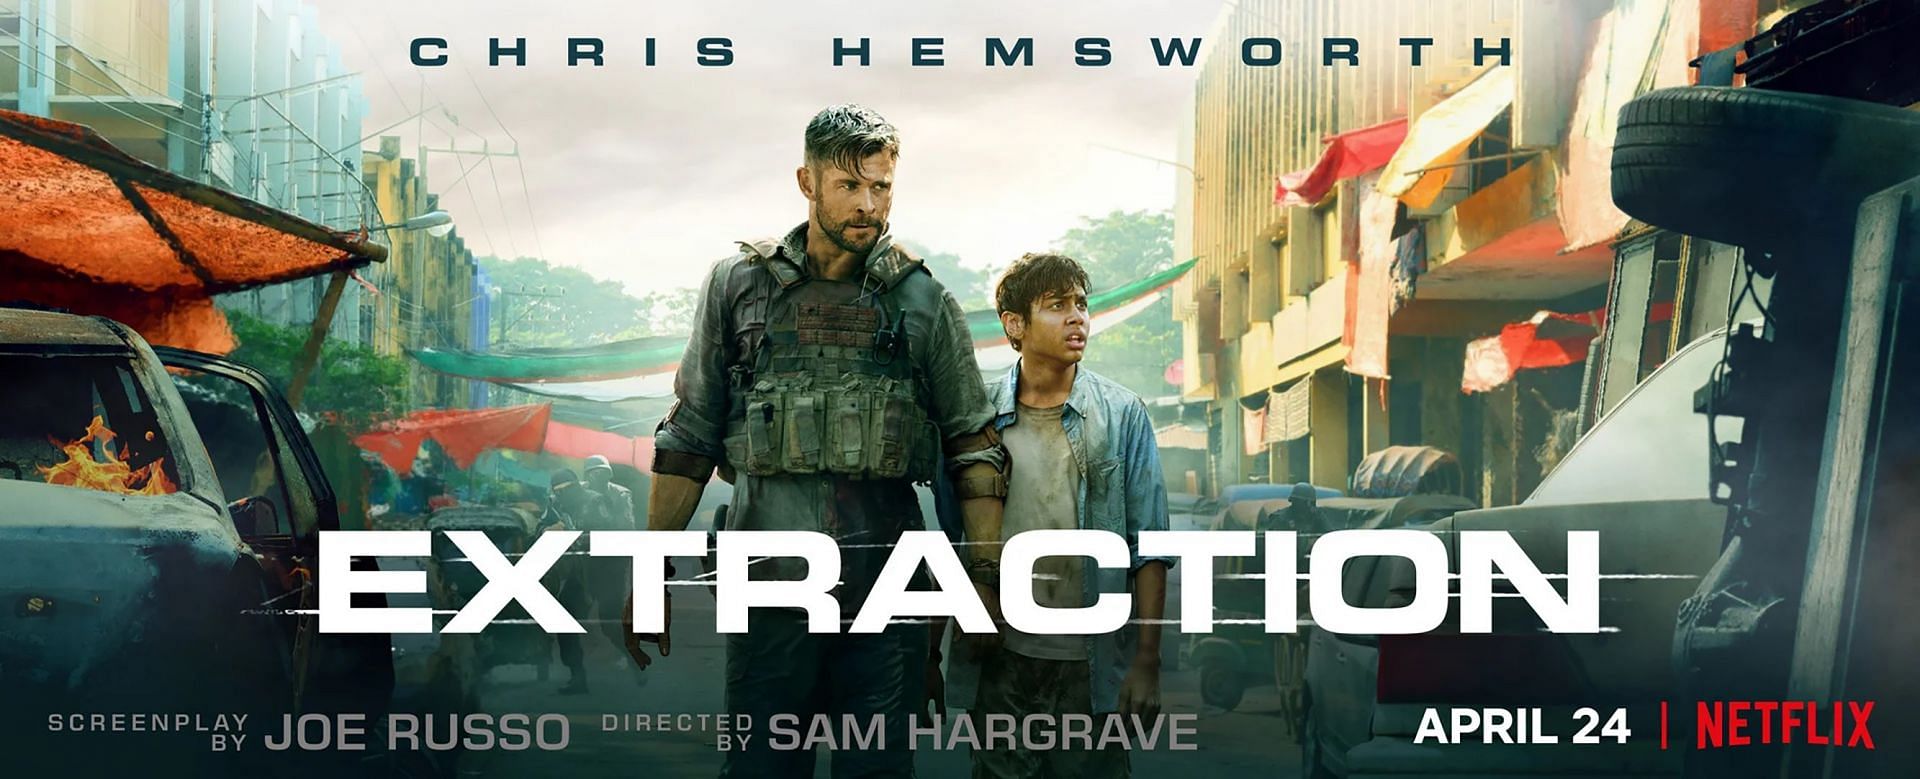 Extraction (Image via Netflix)